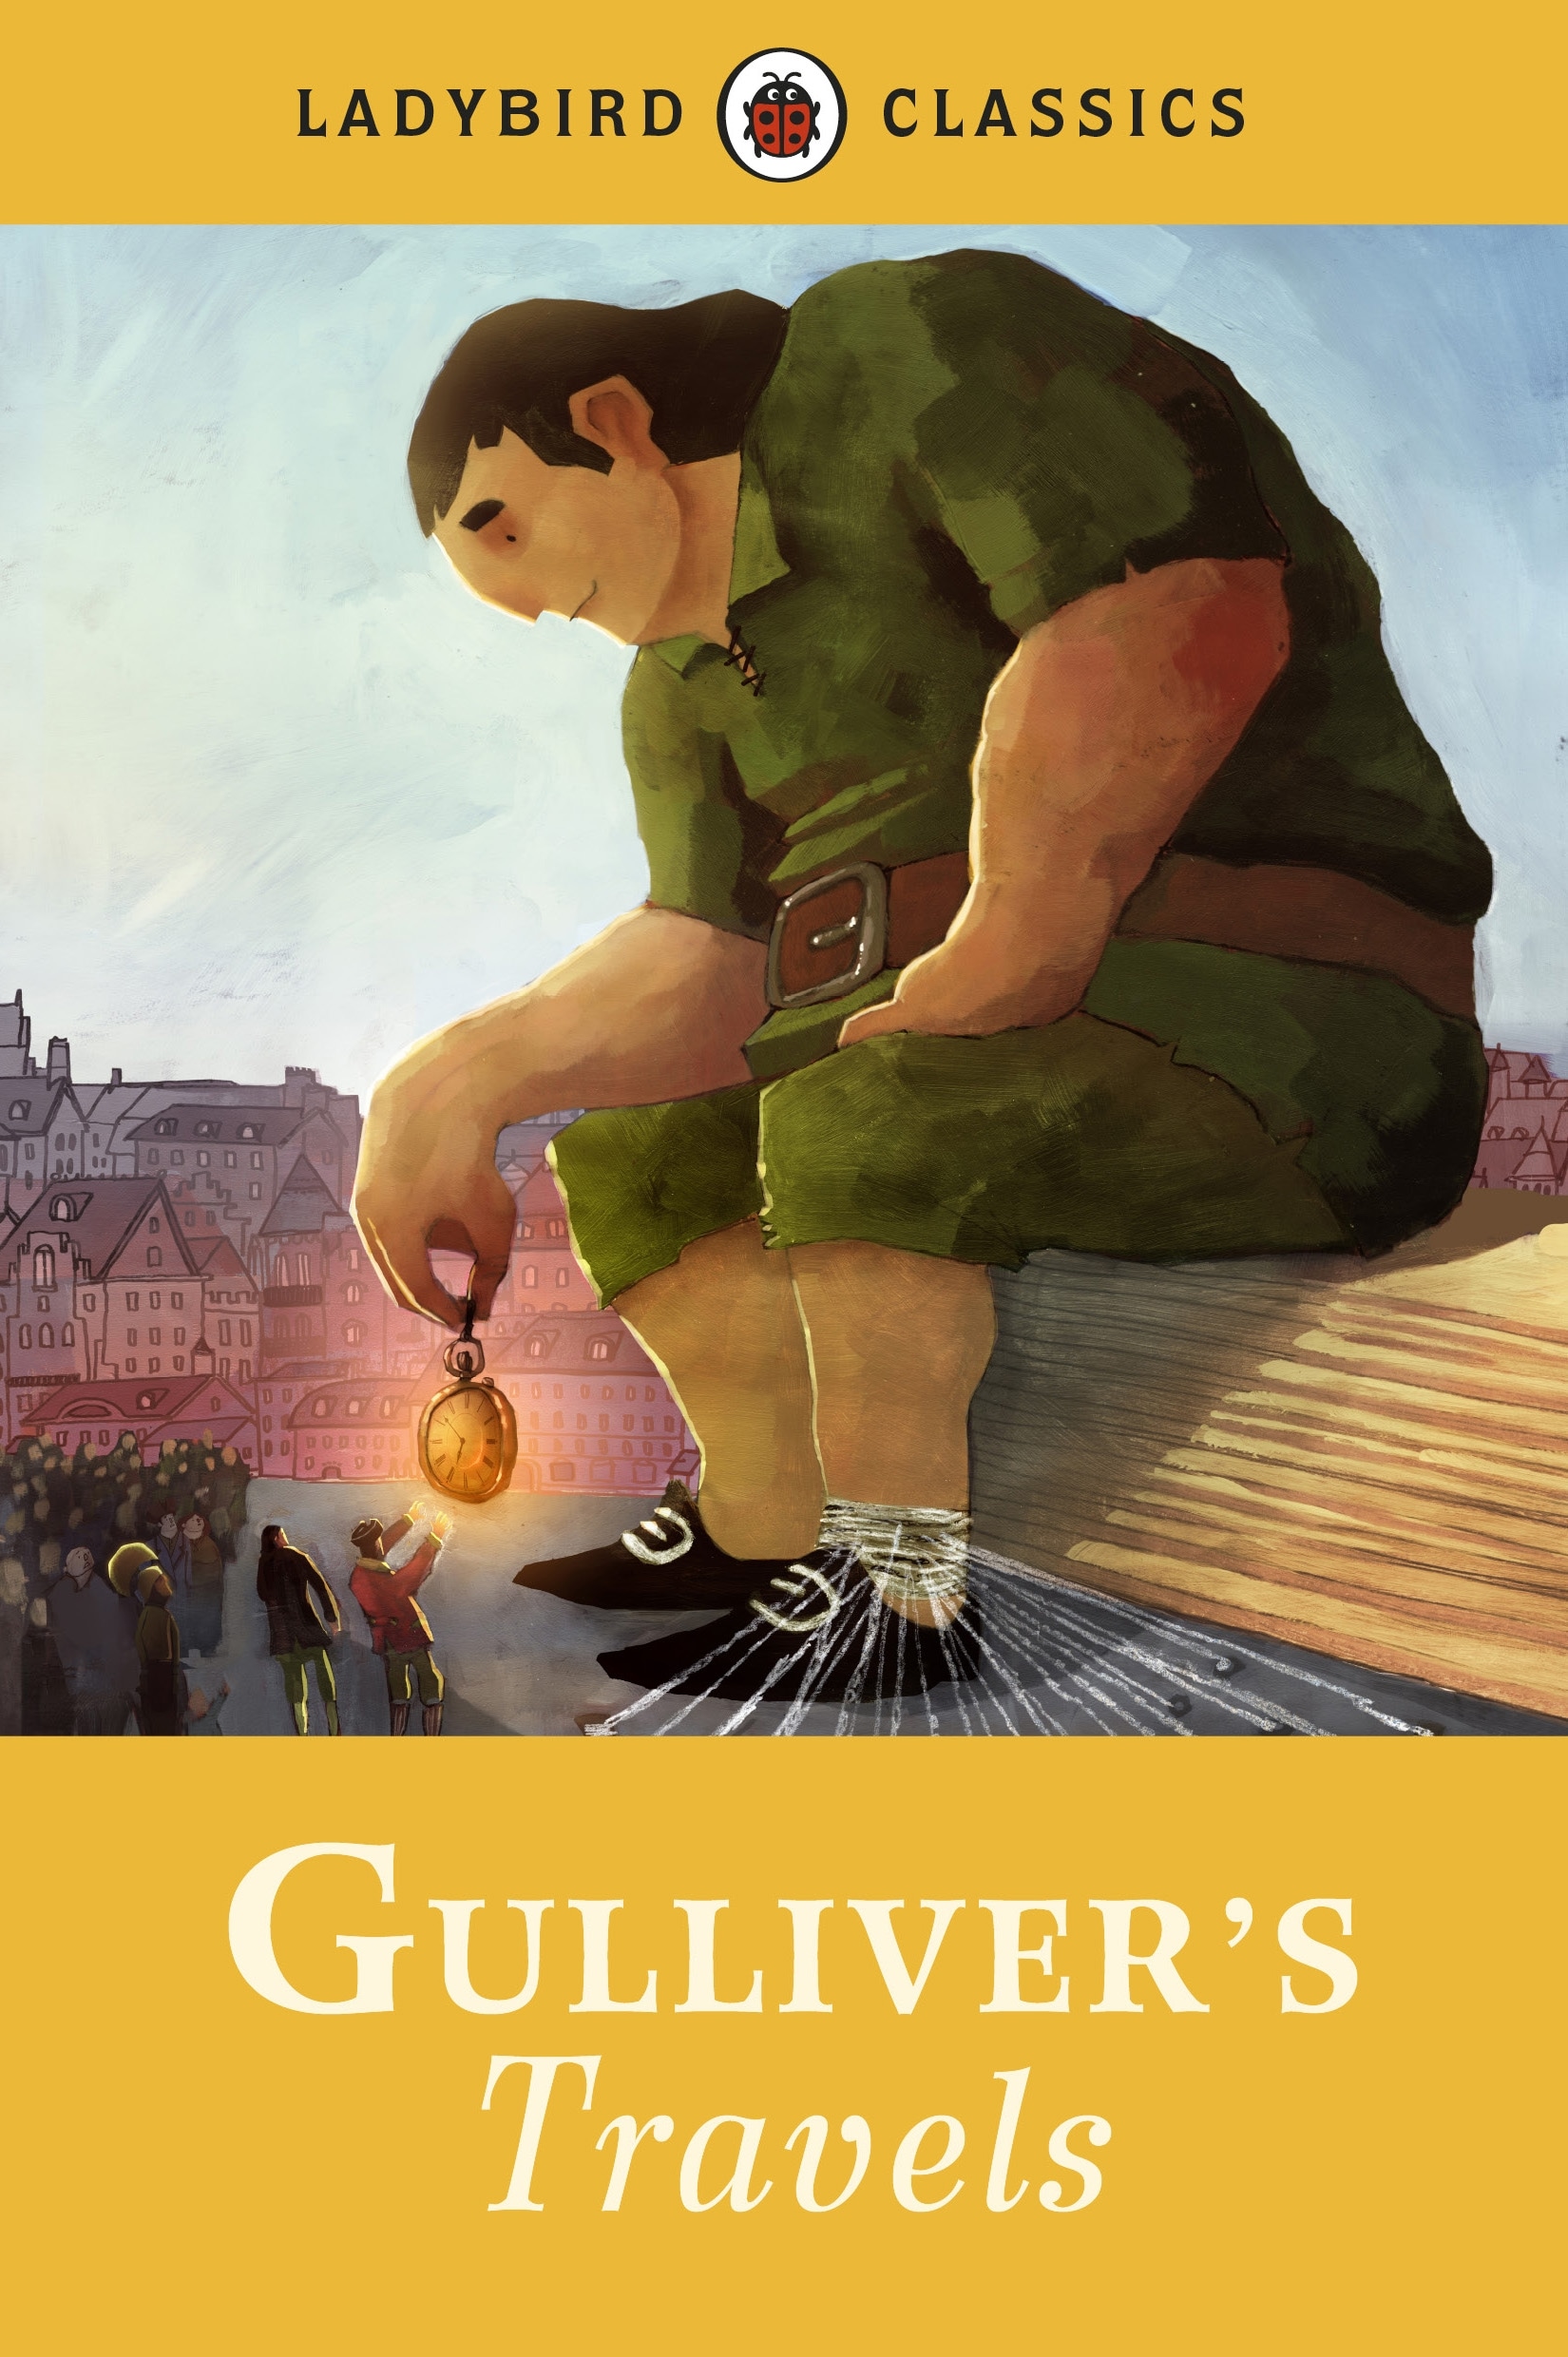 Book “Ladybird Classics: Gulliver's Travels” by Jonathan Swift — July 5, 2012